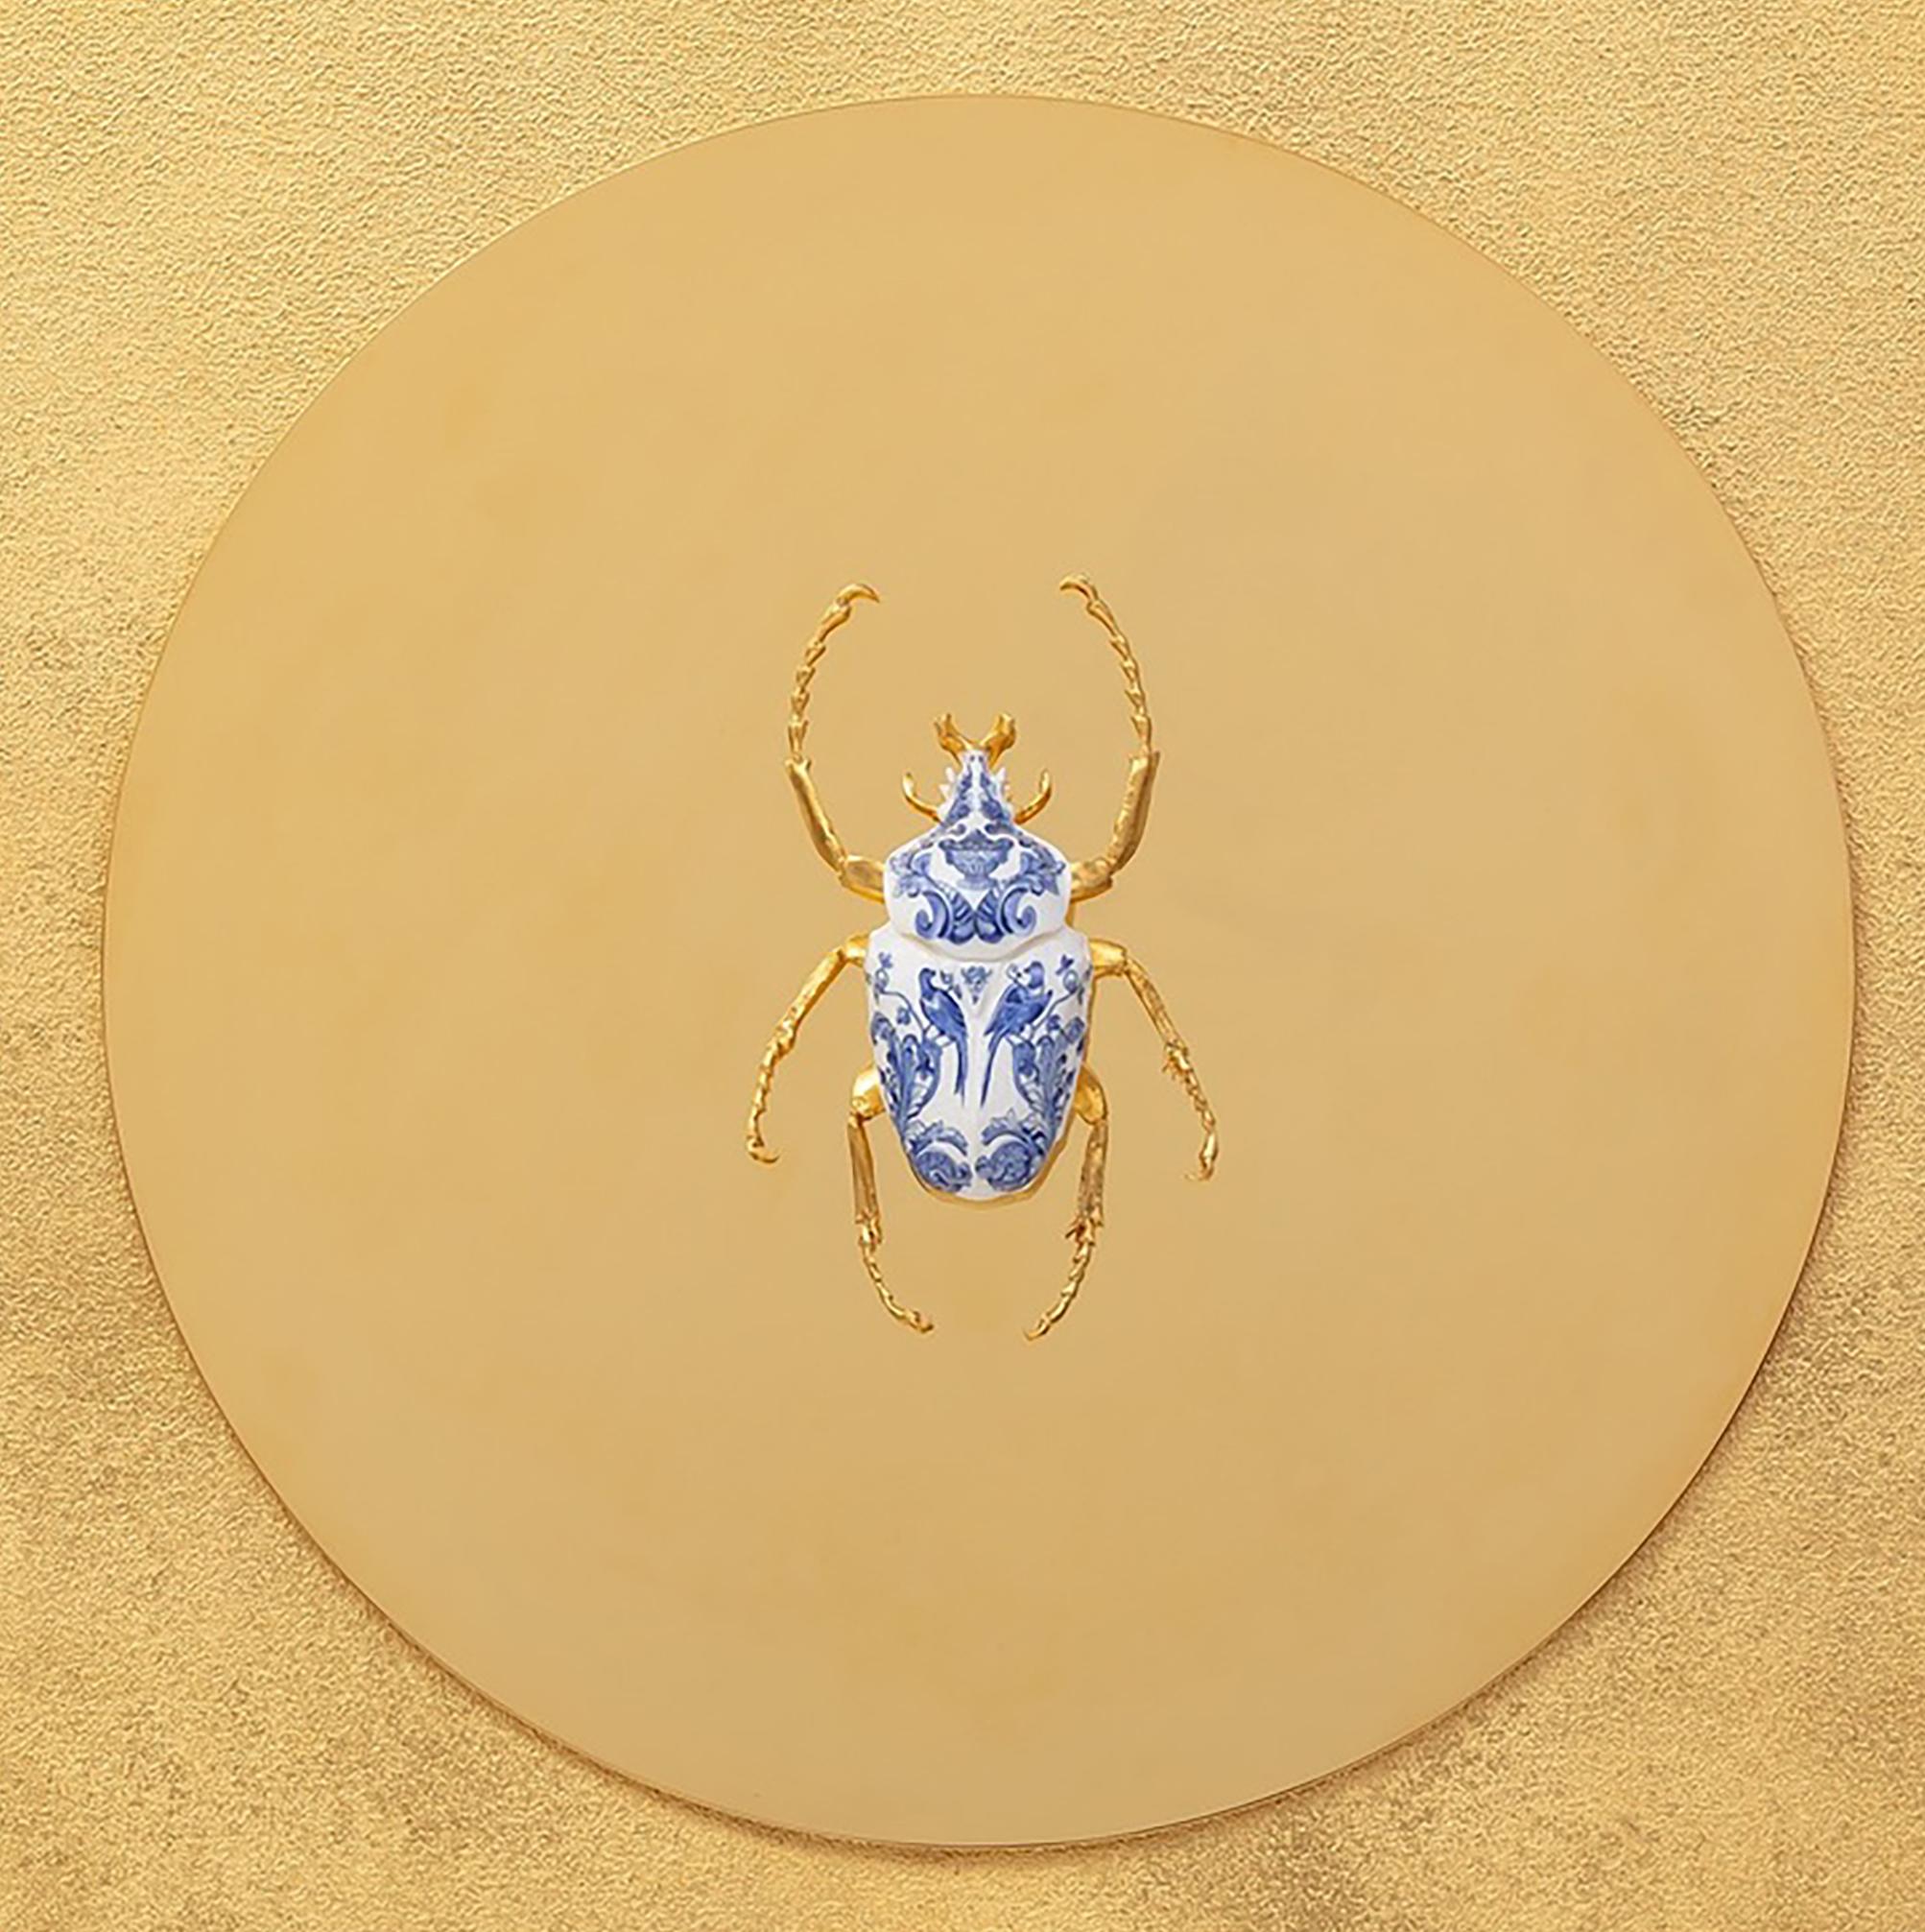 Goliath Beetle Closed - 21st Century, Contemporary, Figurative, Gold Leaf 1